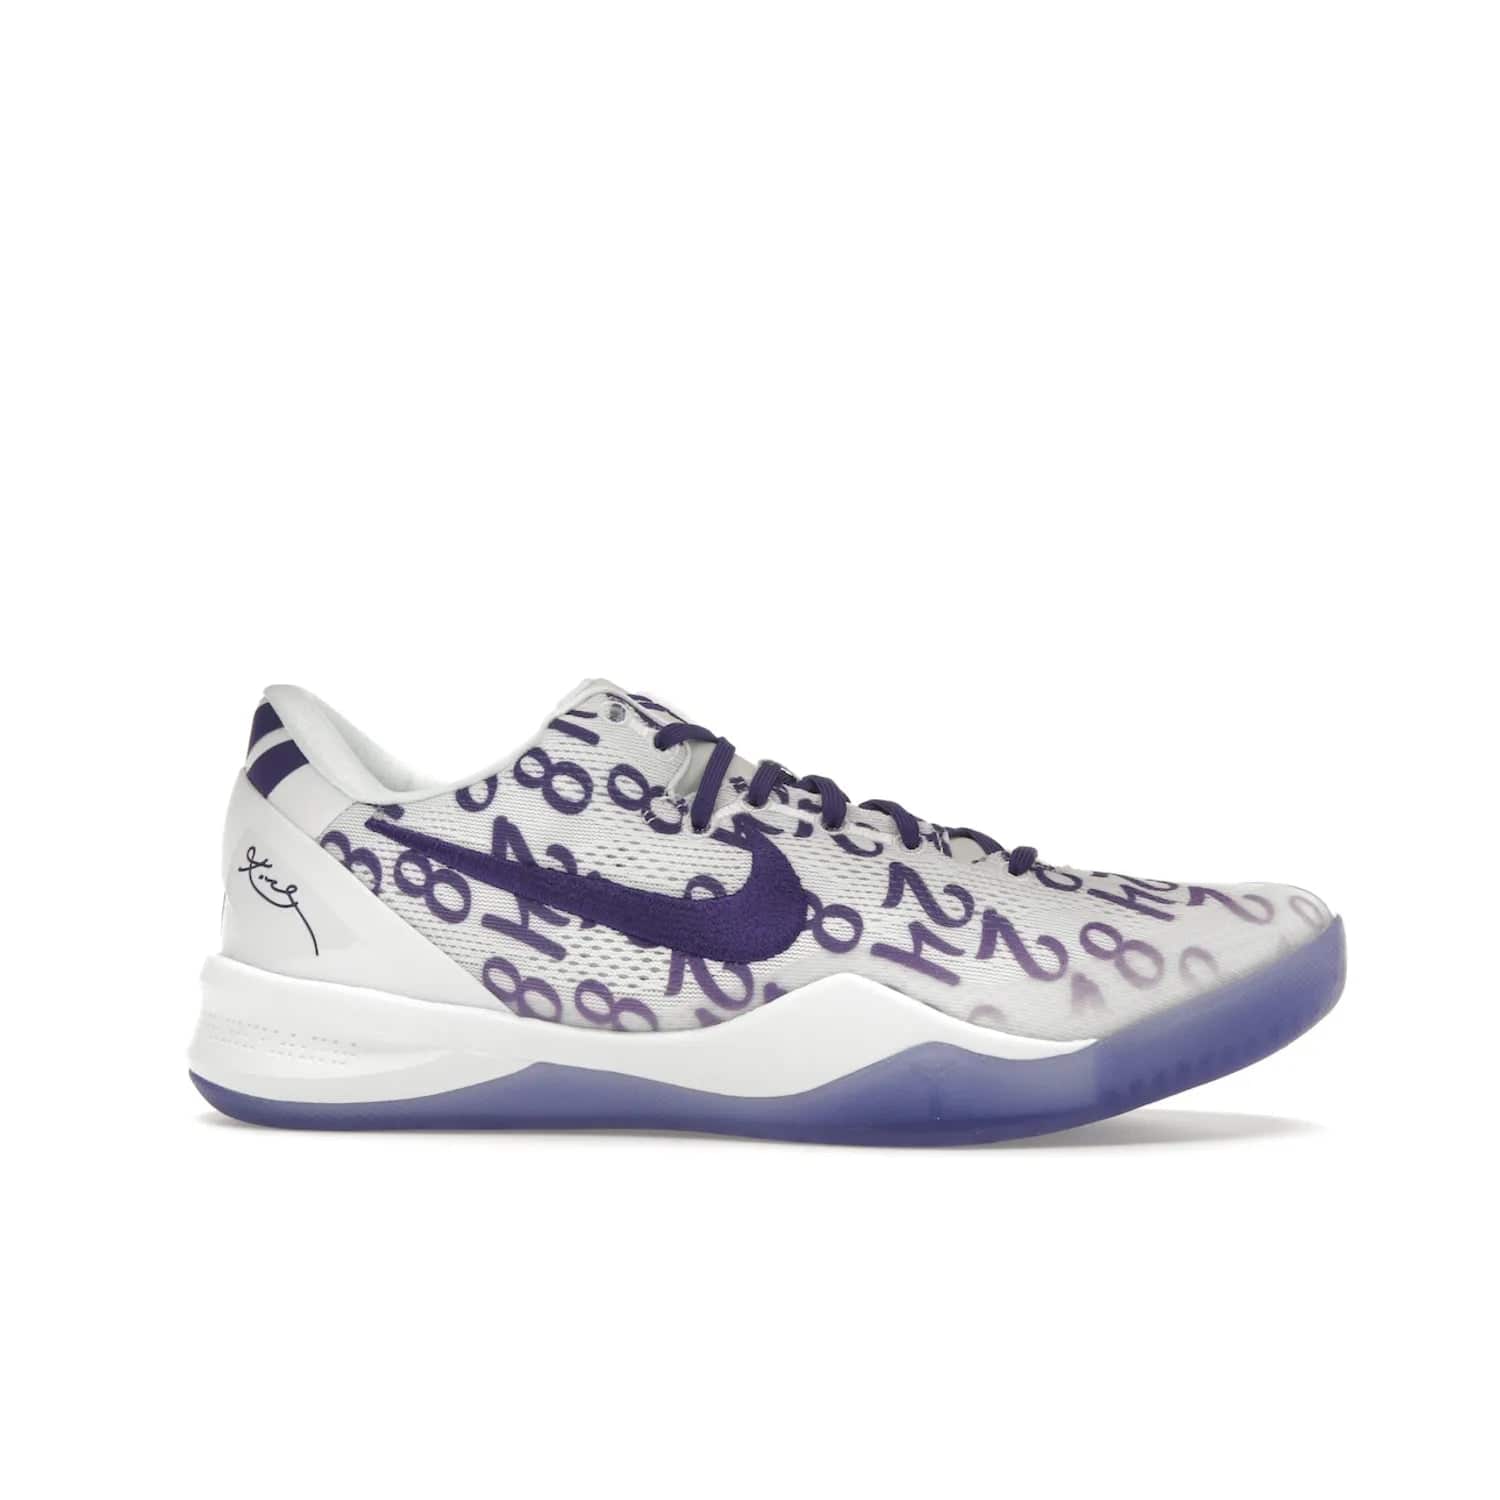 Nike Kobe 8 Protro Court Purple - Image 2 - Only at www.BallersClubKickz.com - 